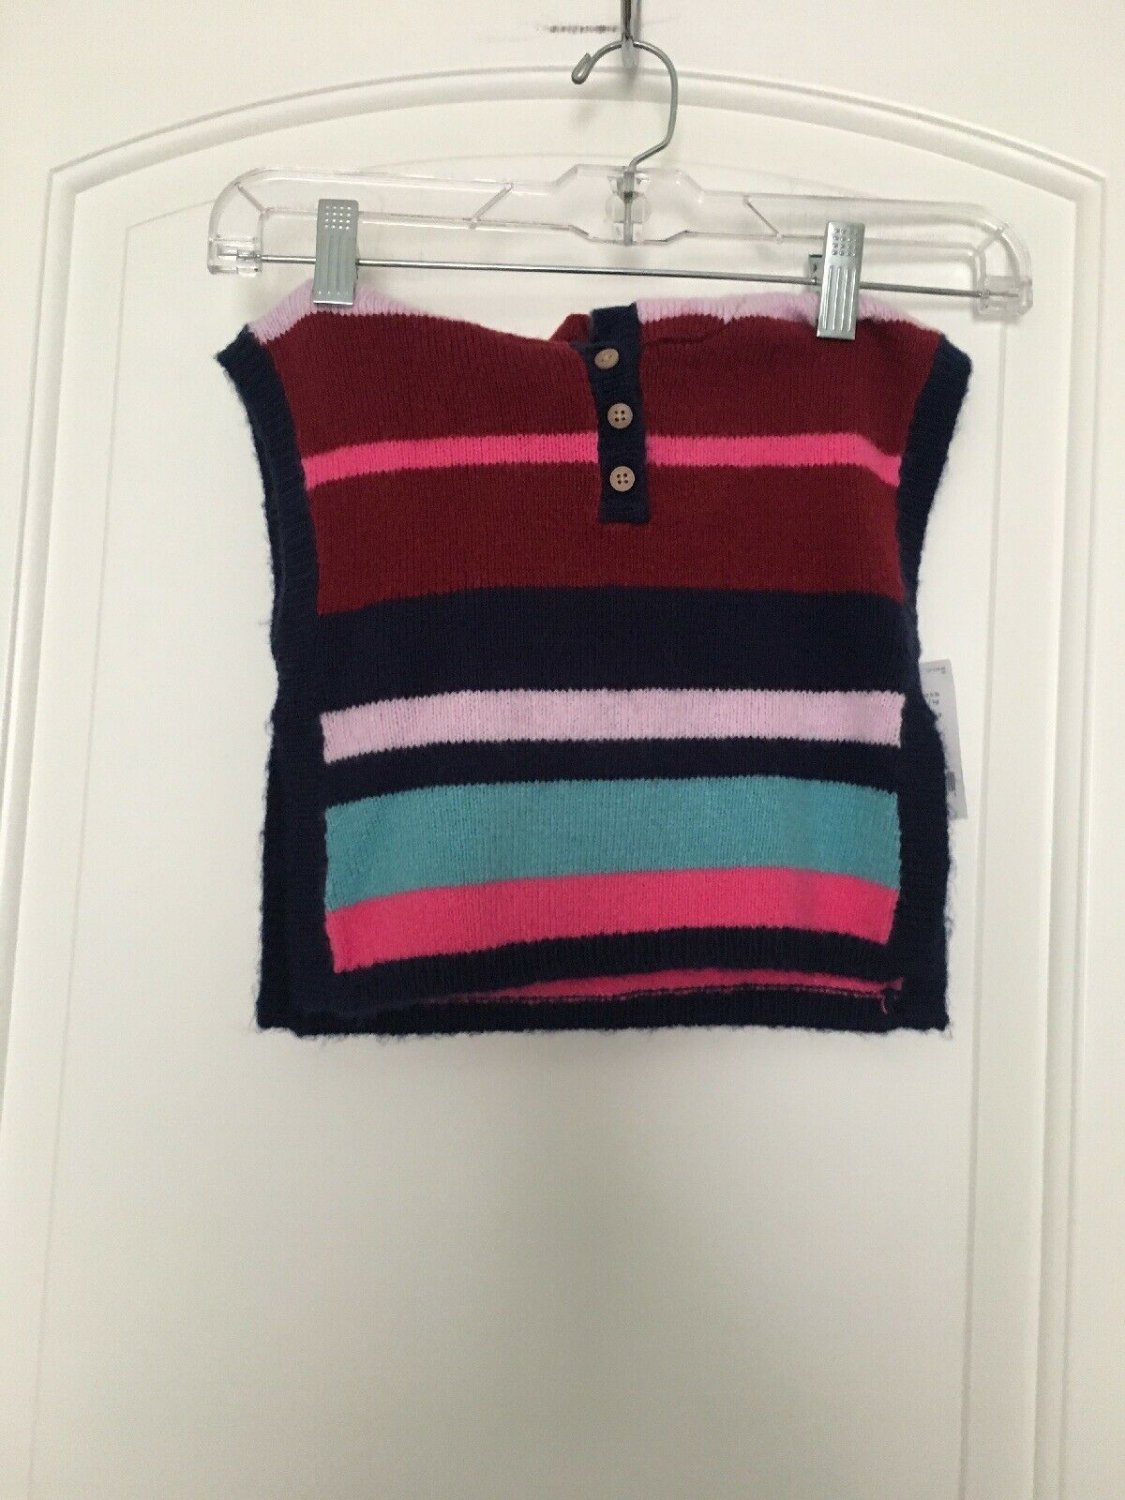 Carter's Infant Baby Girl's Hooded Sweater Vest Sz 3M MultiColor